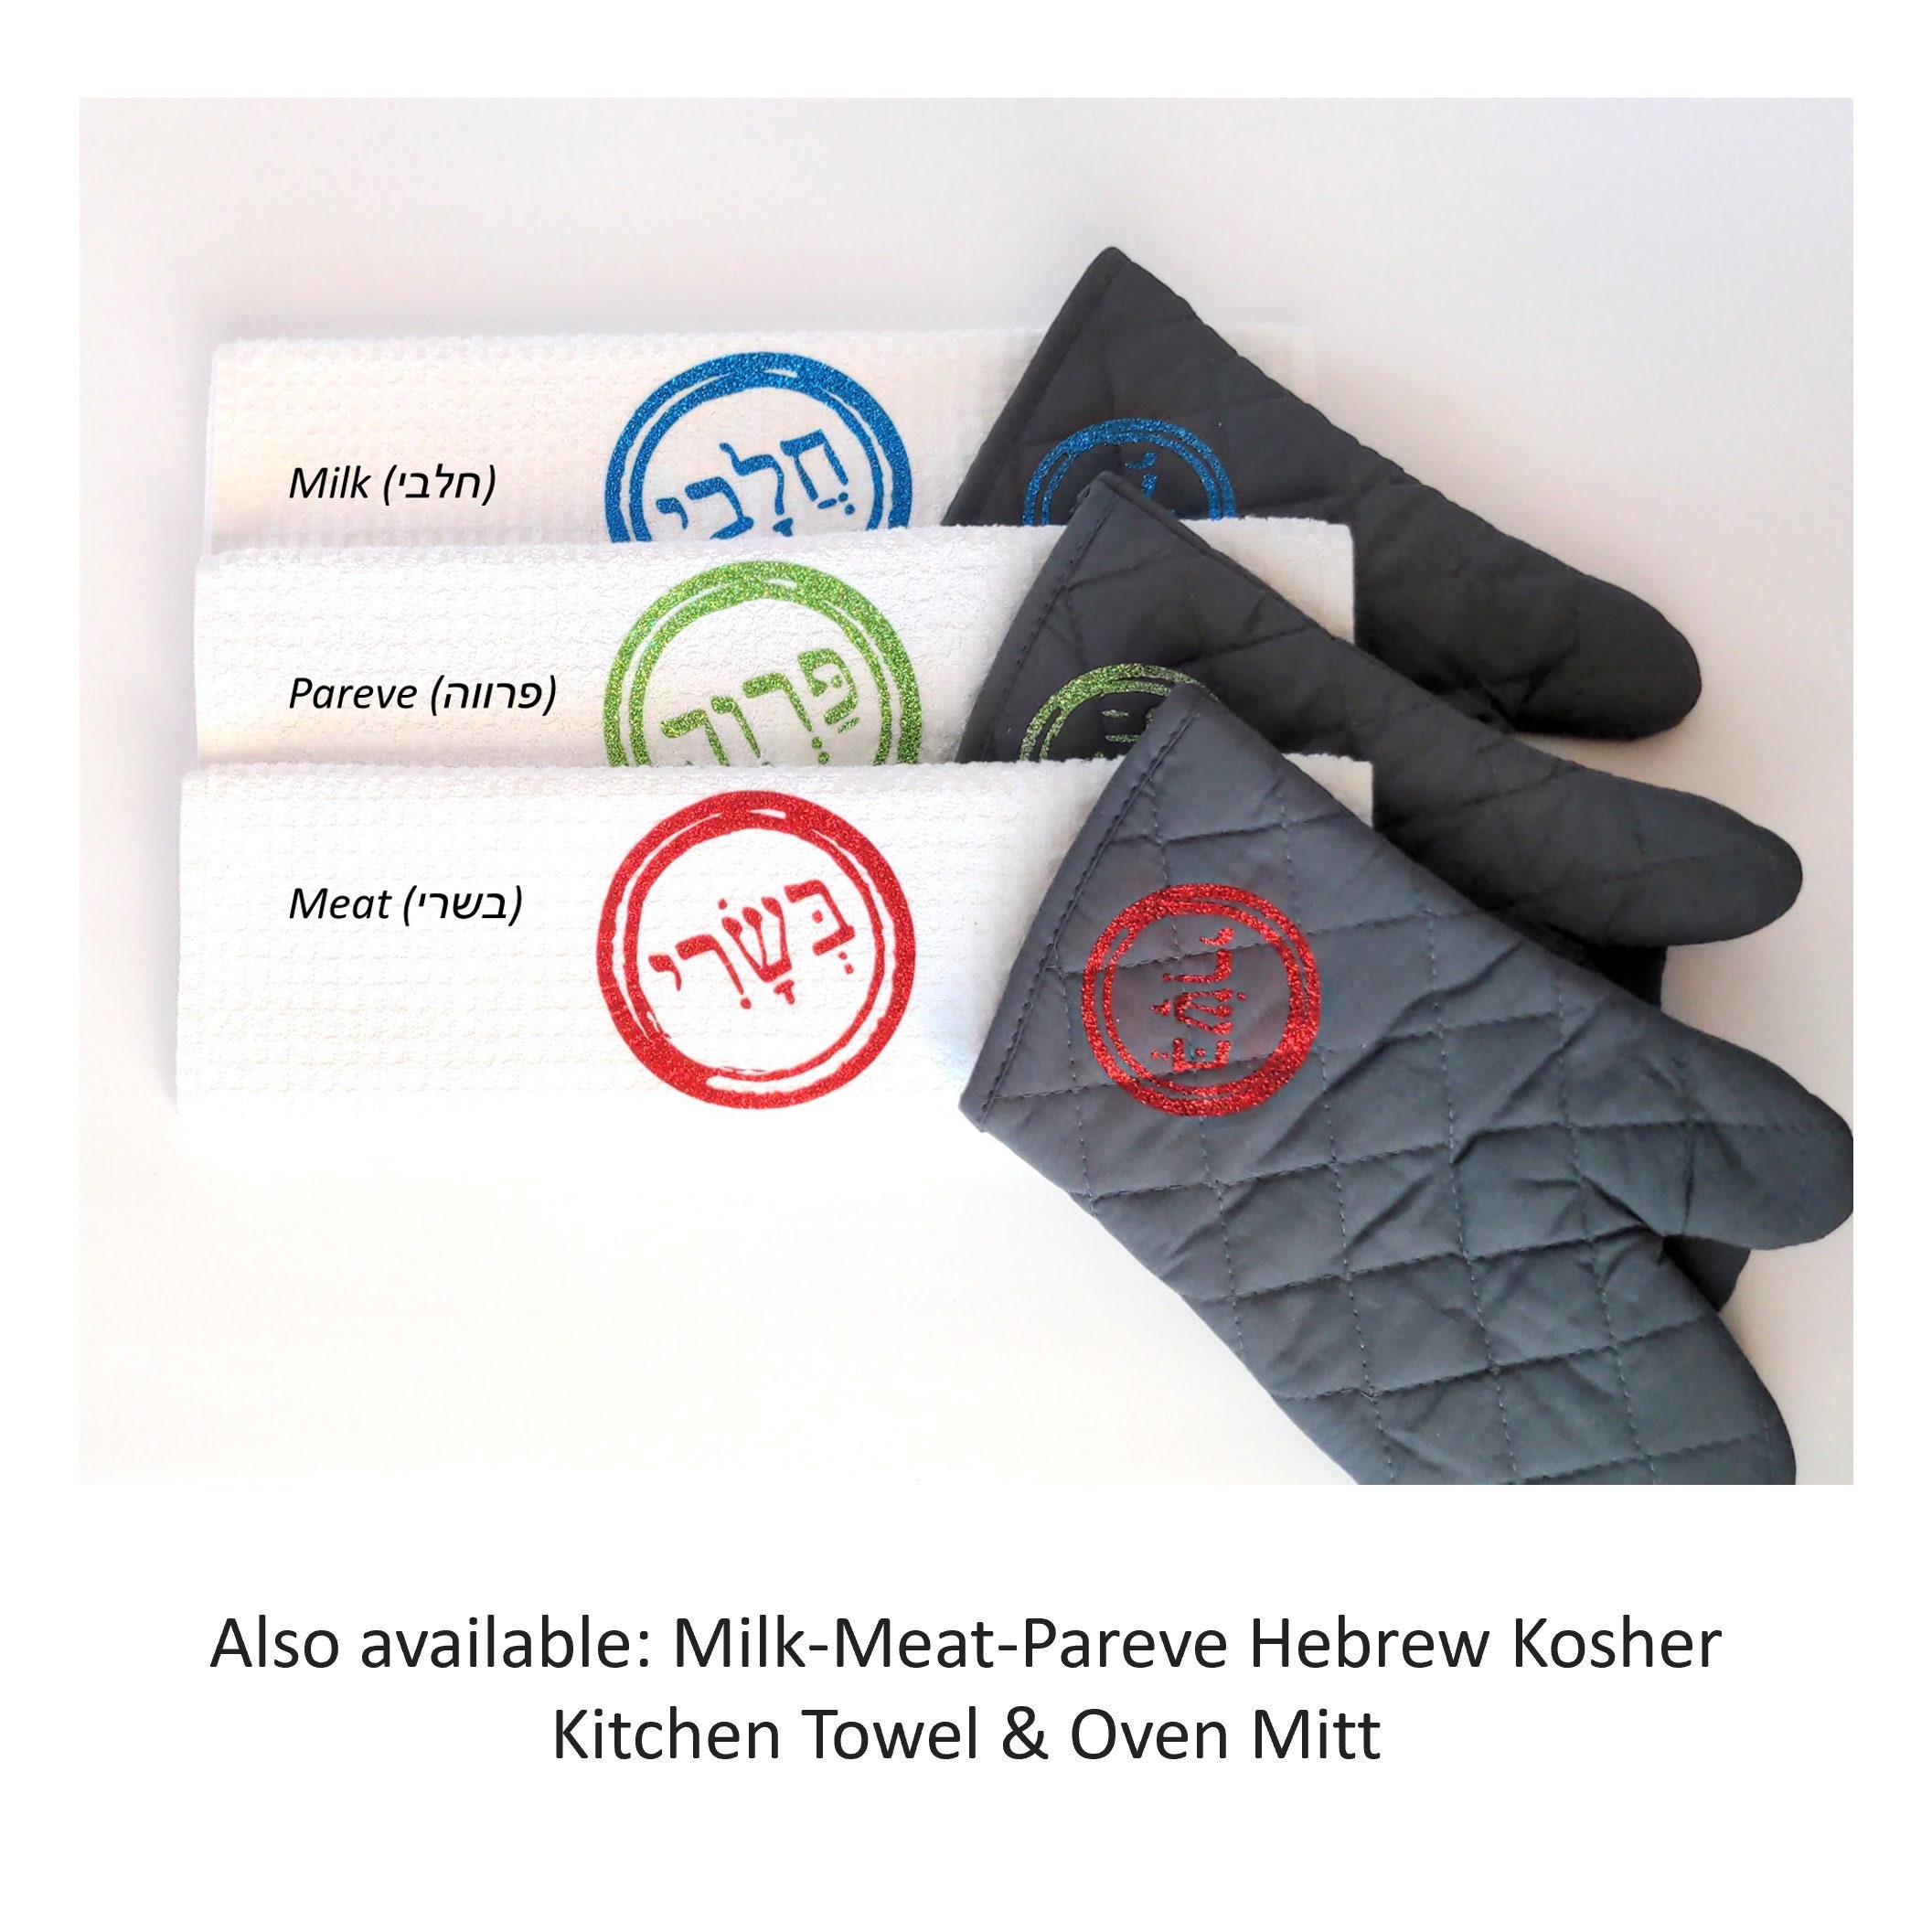 2 Sets Milkchalav&meatbasar Kitchen Towel Oven Mitt Set Hebrew